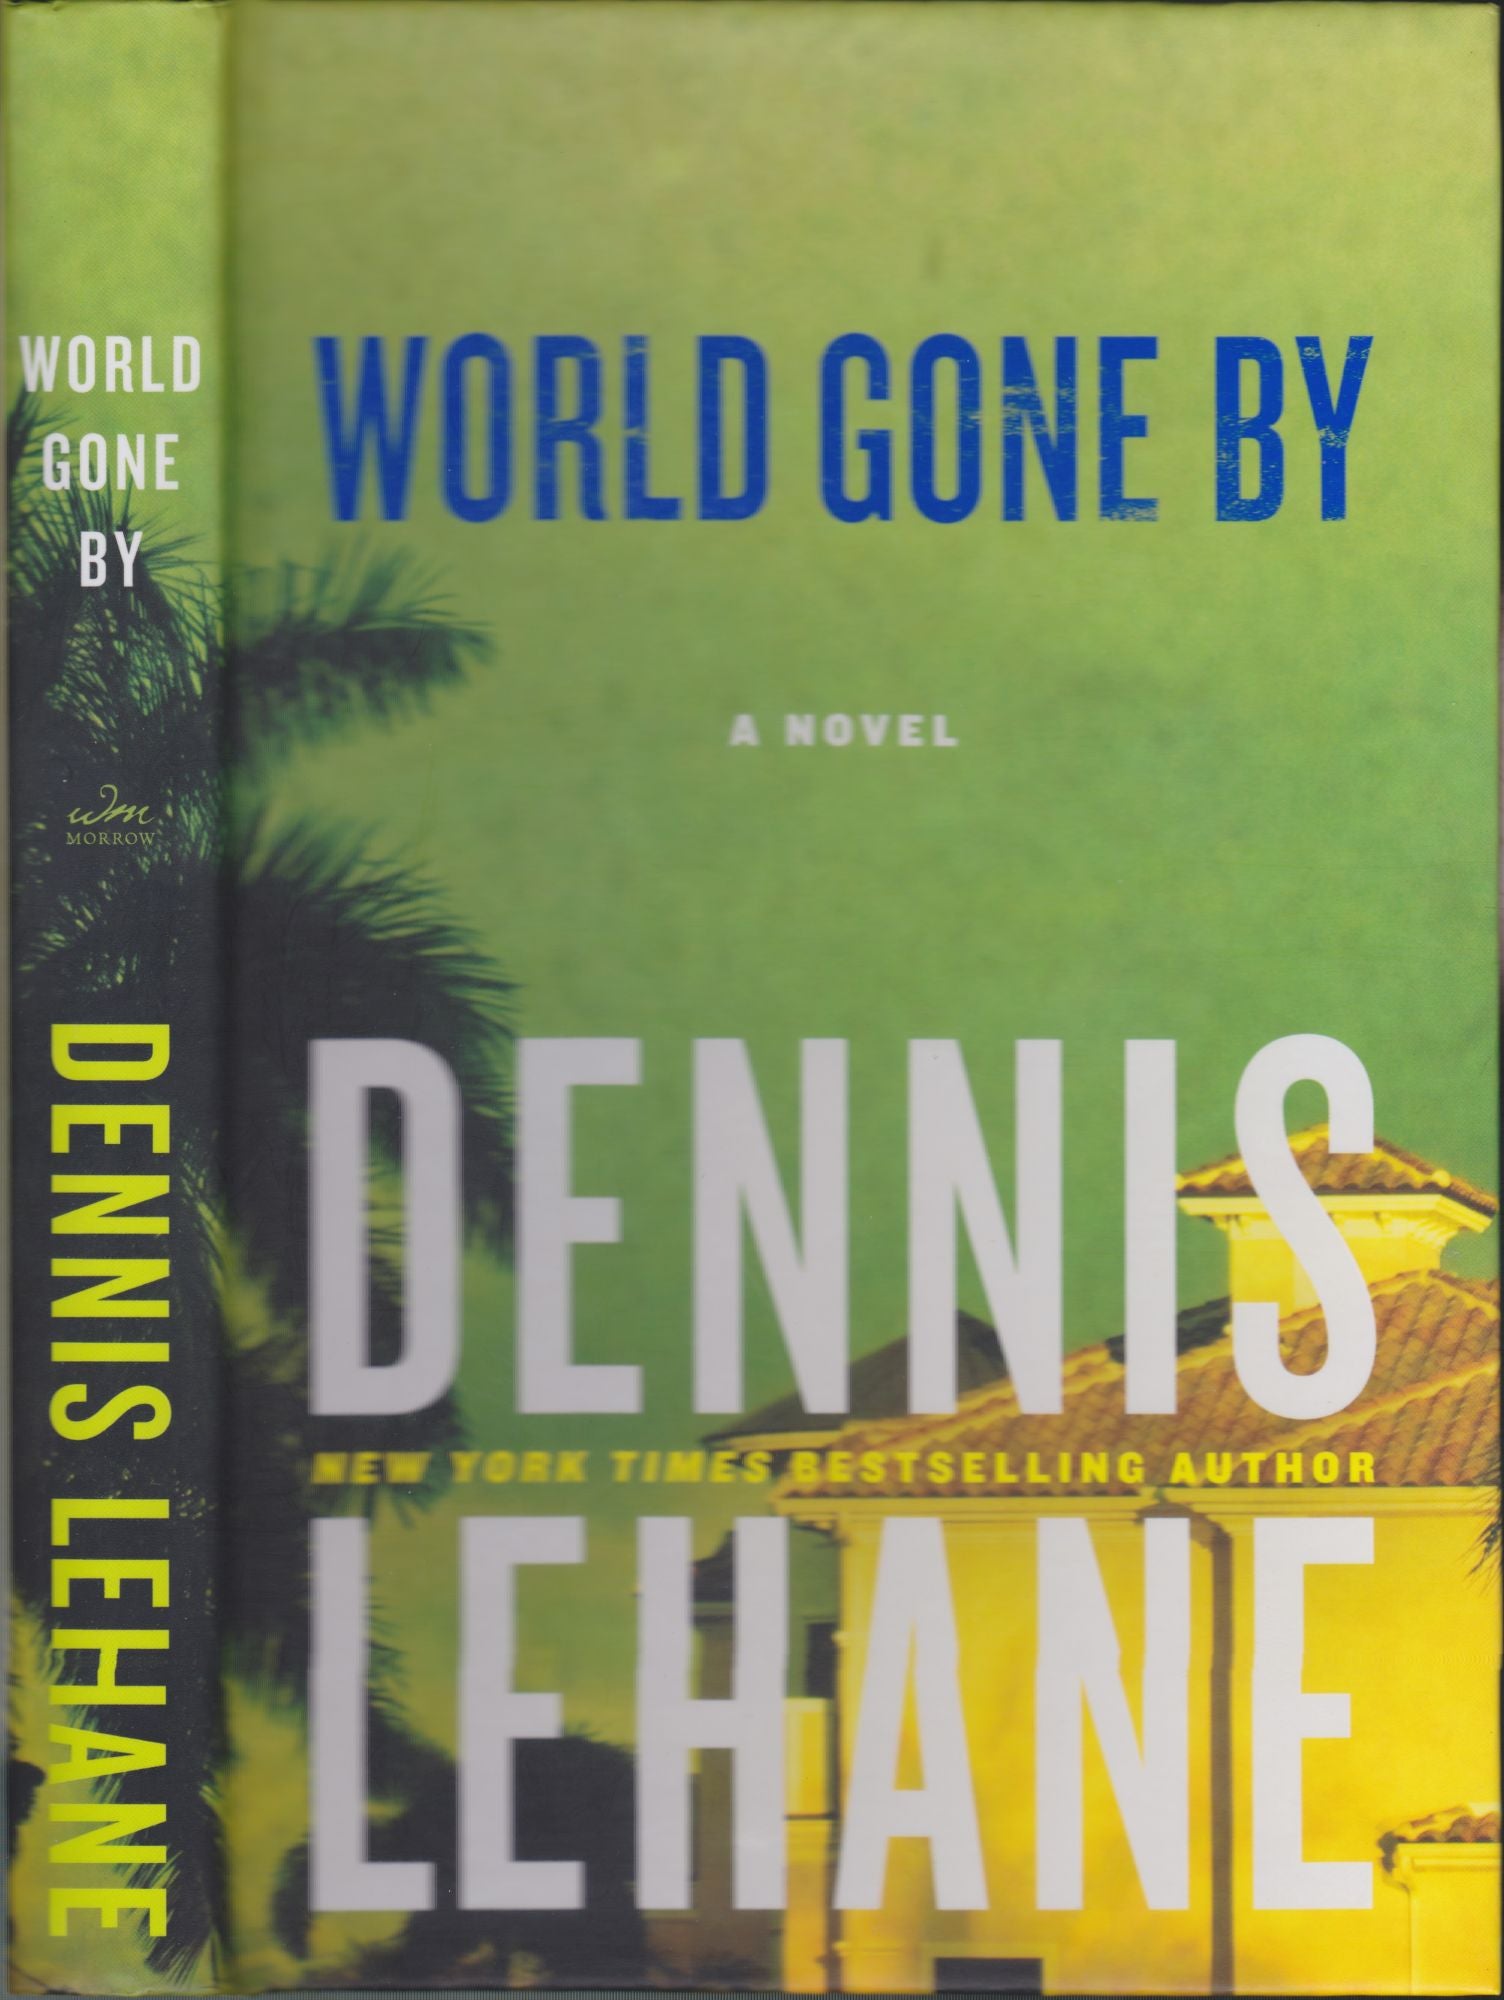 World Gone By Dennis Lehane First Edition 